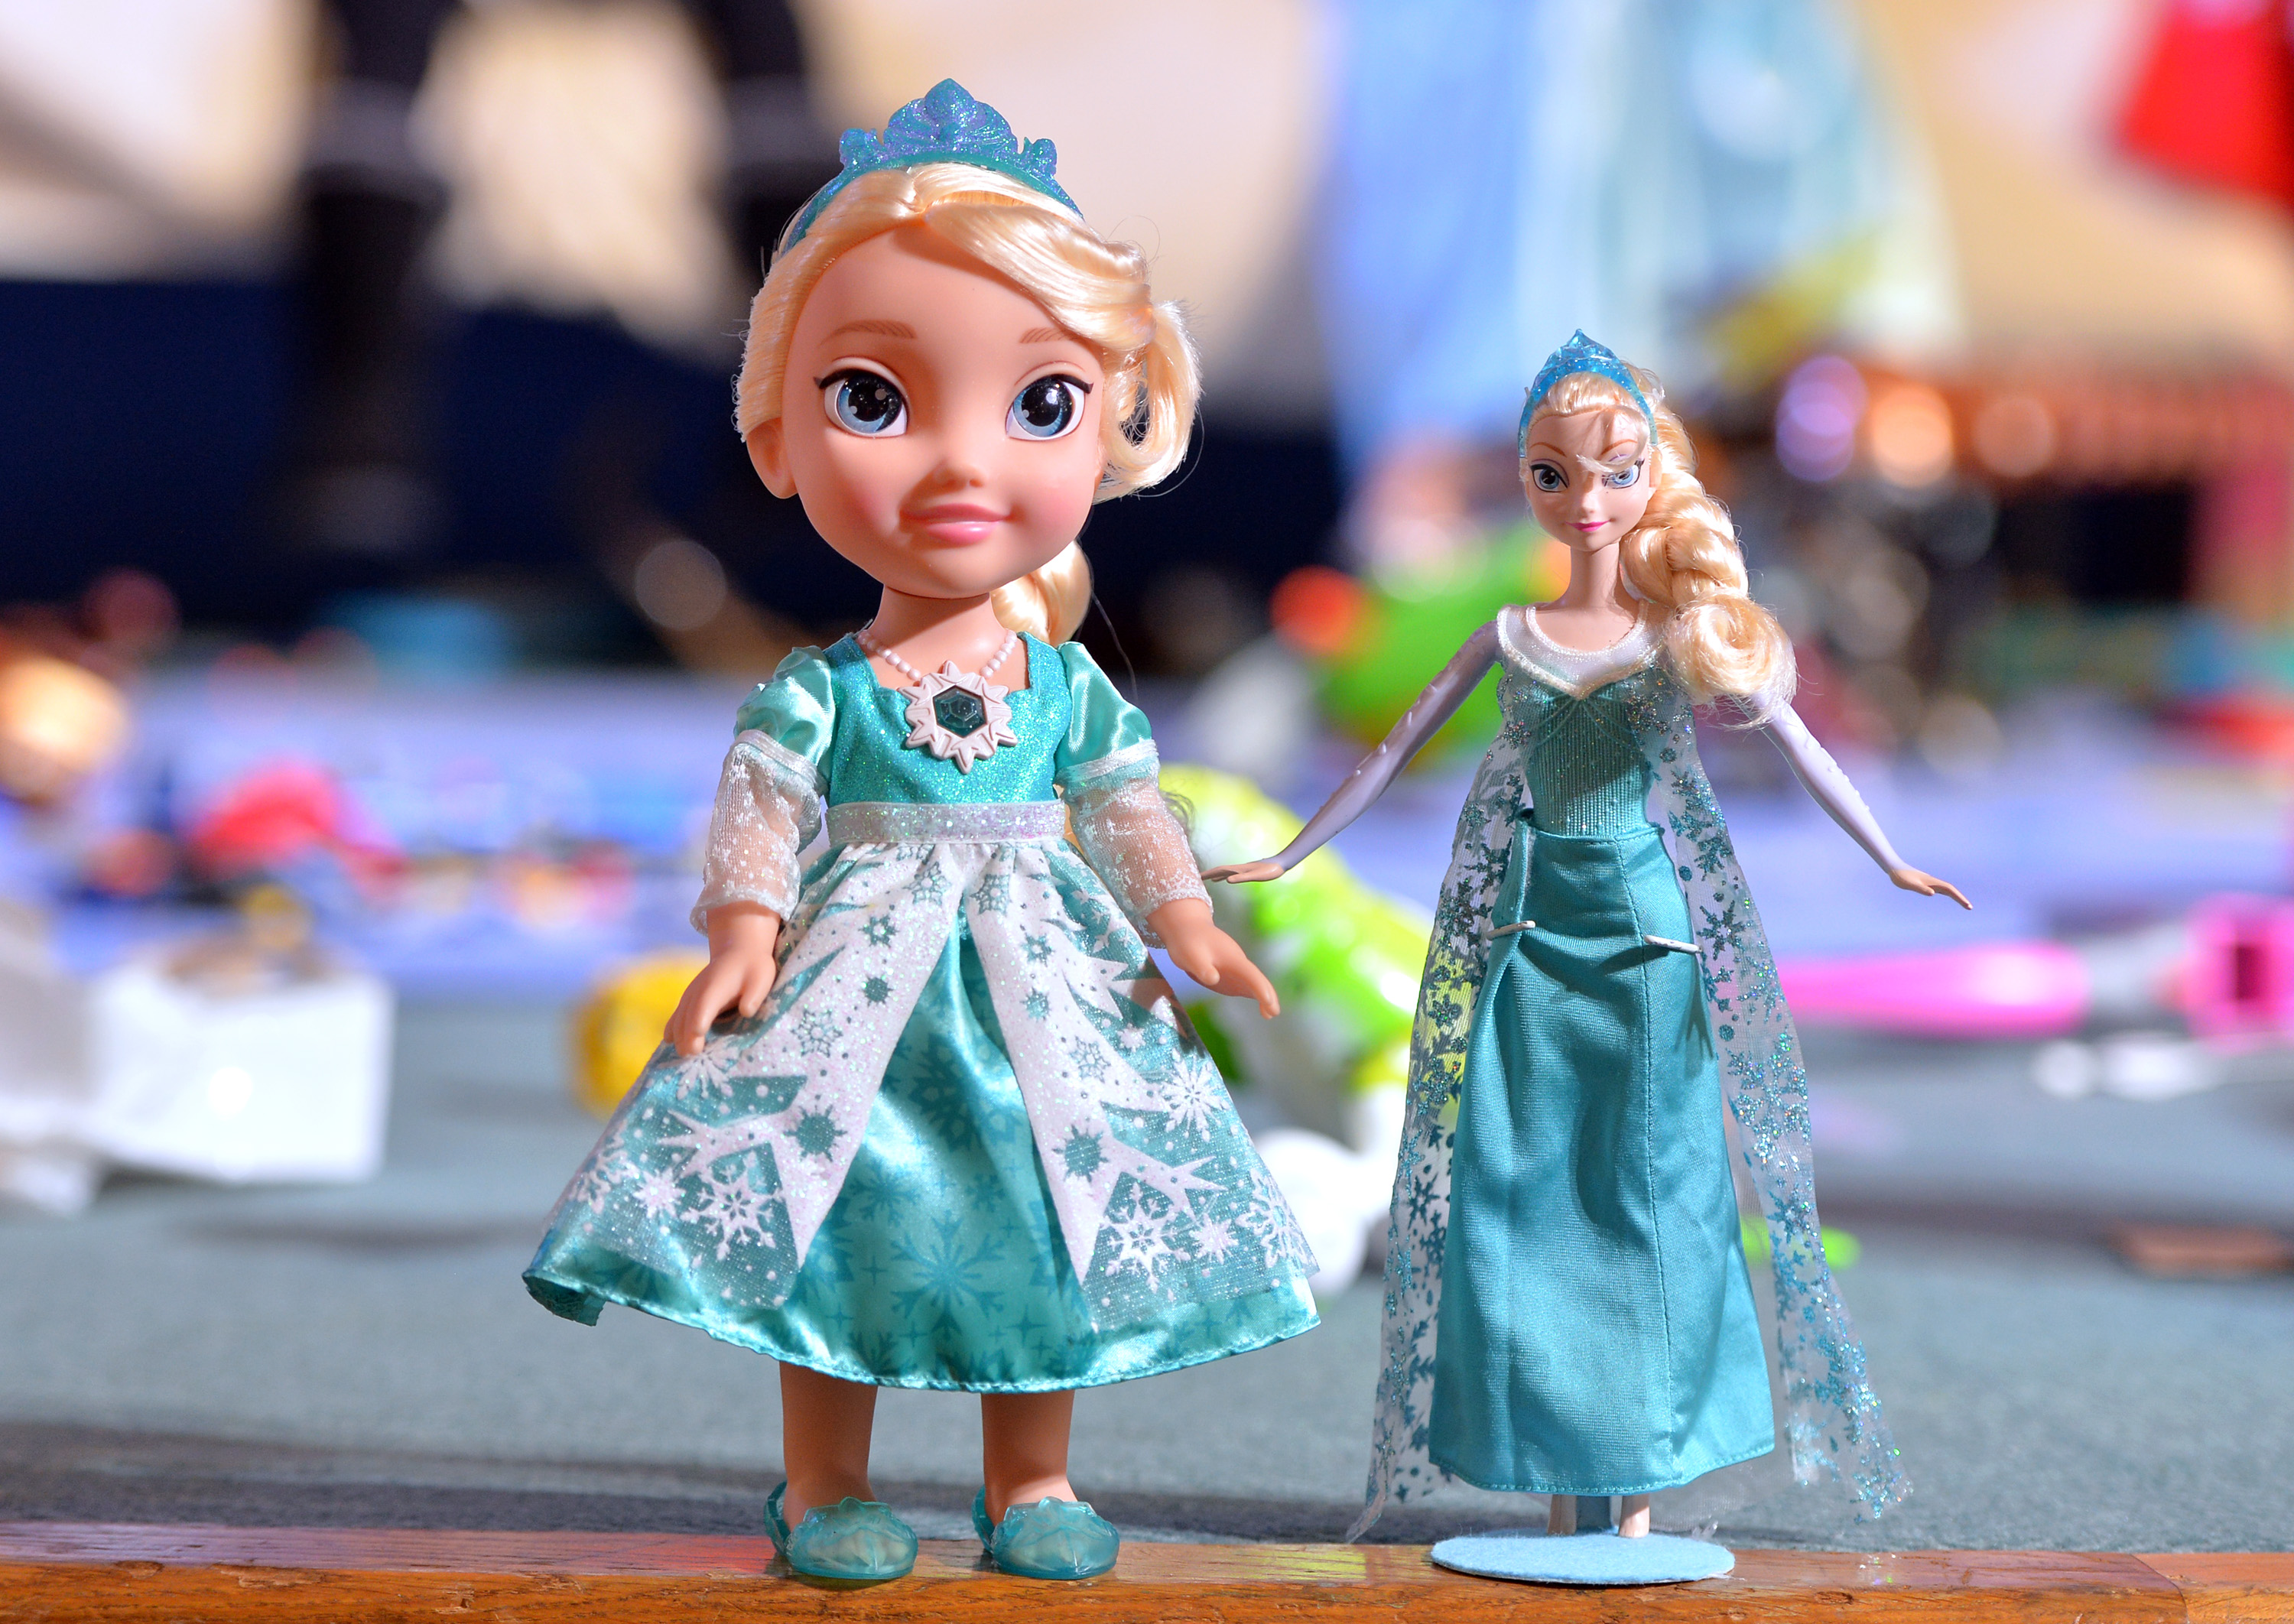 Elsa Forced Sex - Haunted 'Frozen' Elsa Doll Allegedly Terrorized Innocent Family